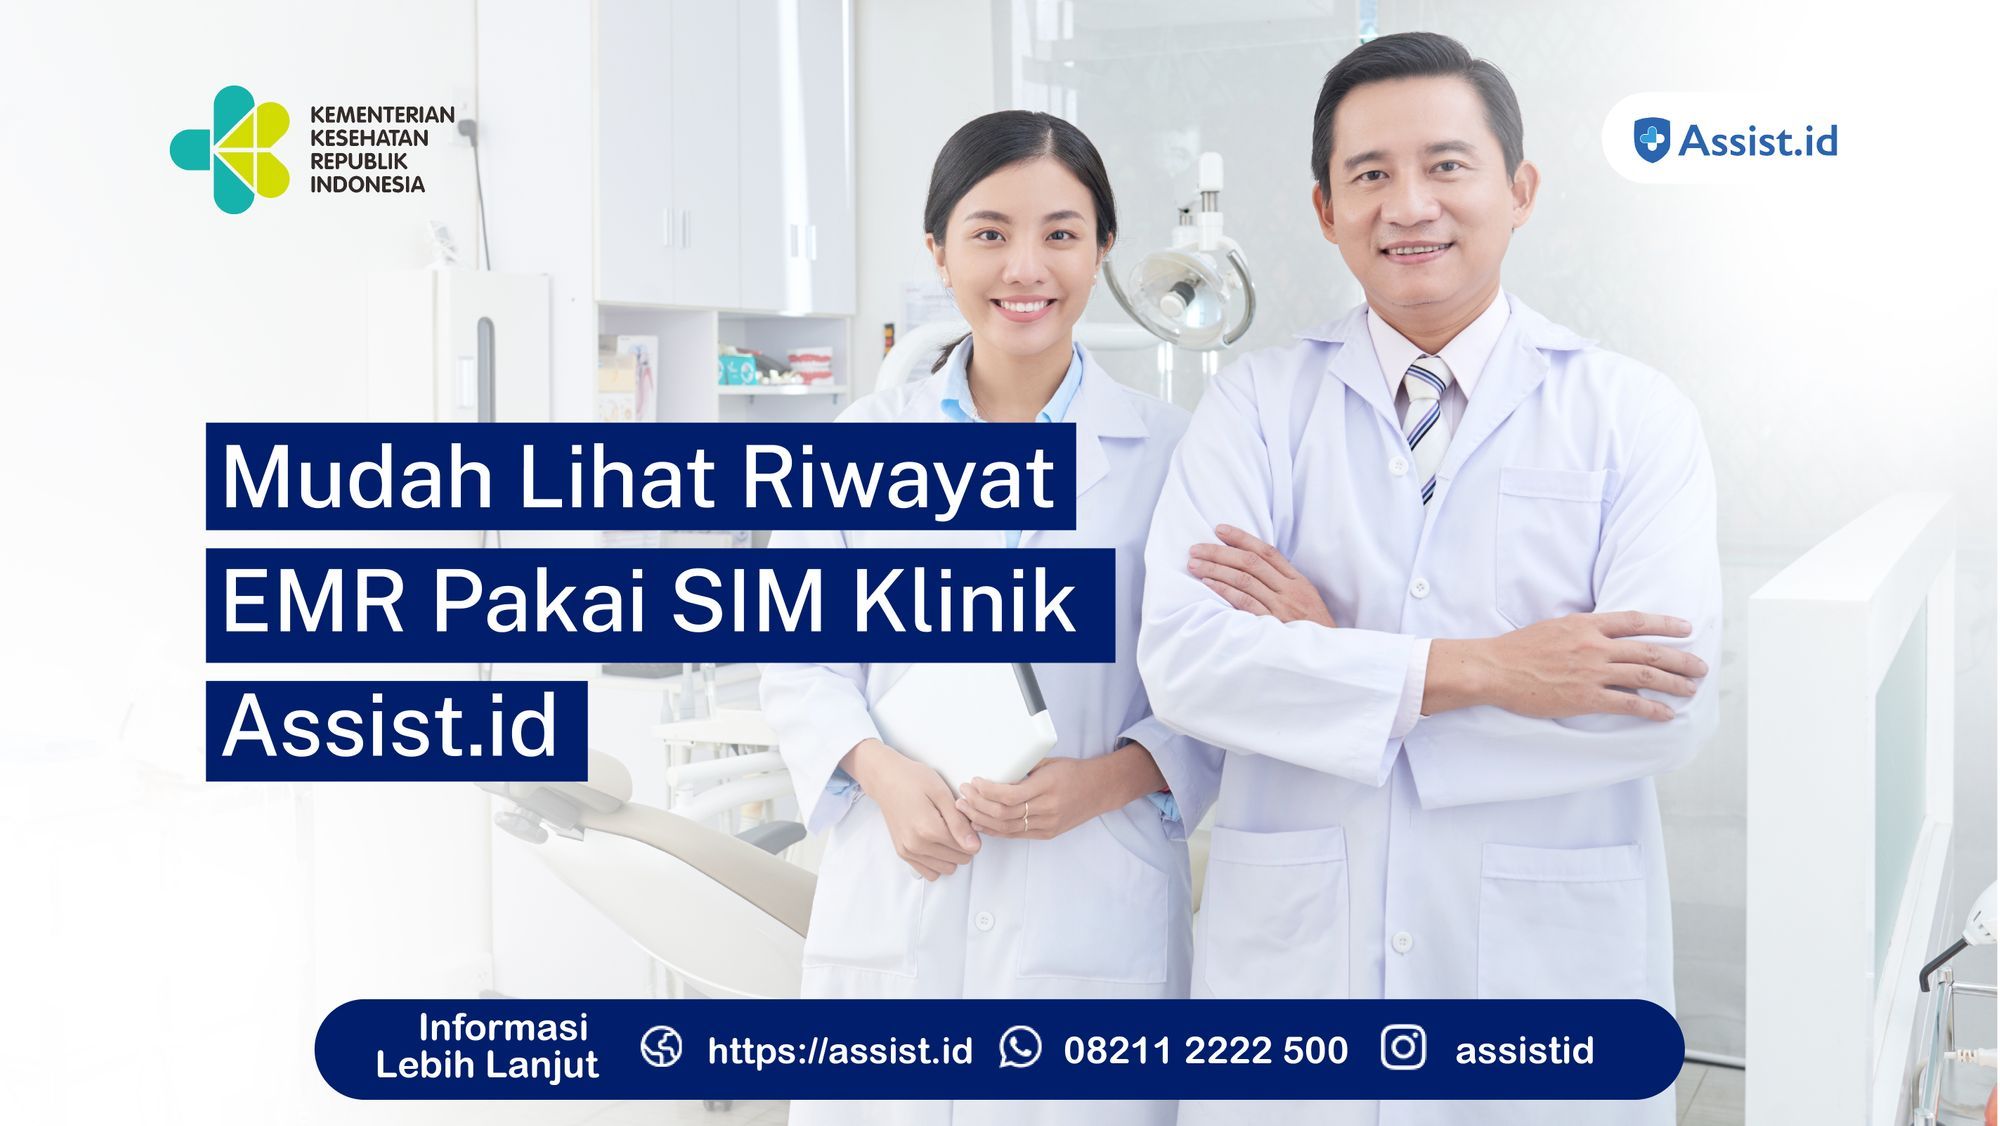 Mudah Lihat Riwayat Electronic Medical Record Pakai SIM Klinik Assist.id